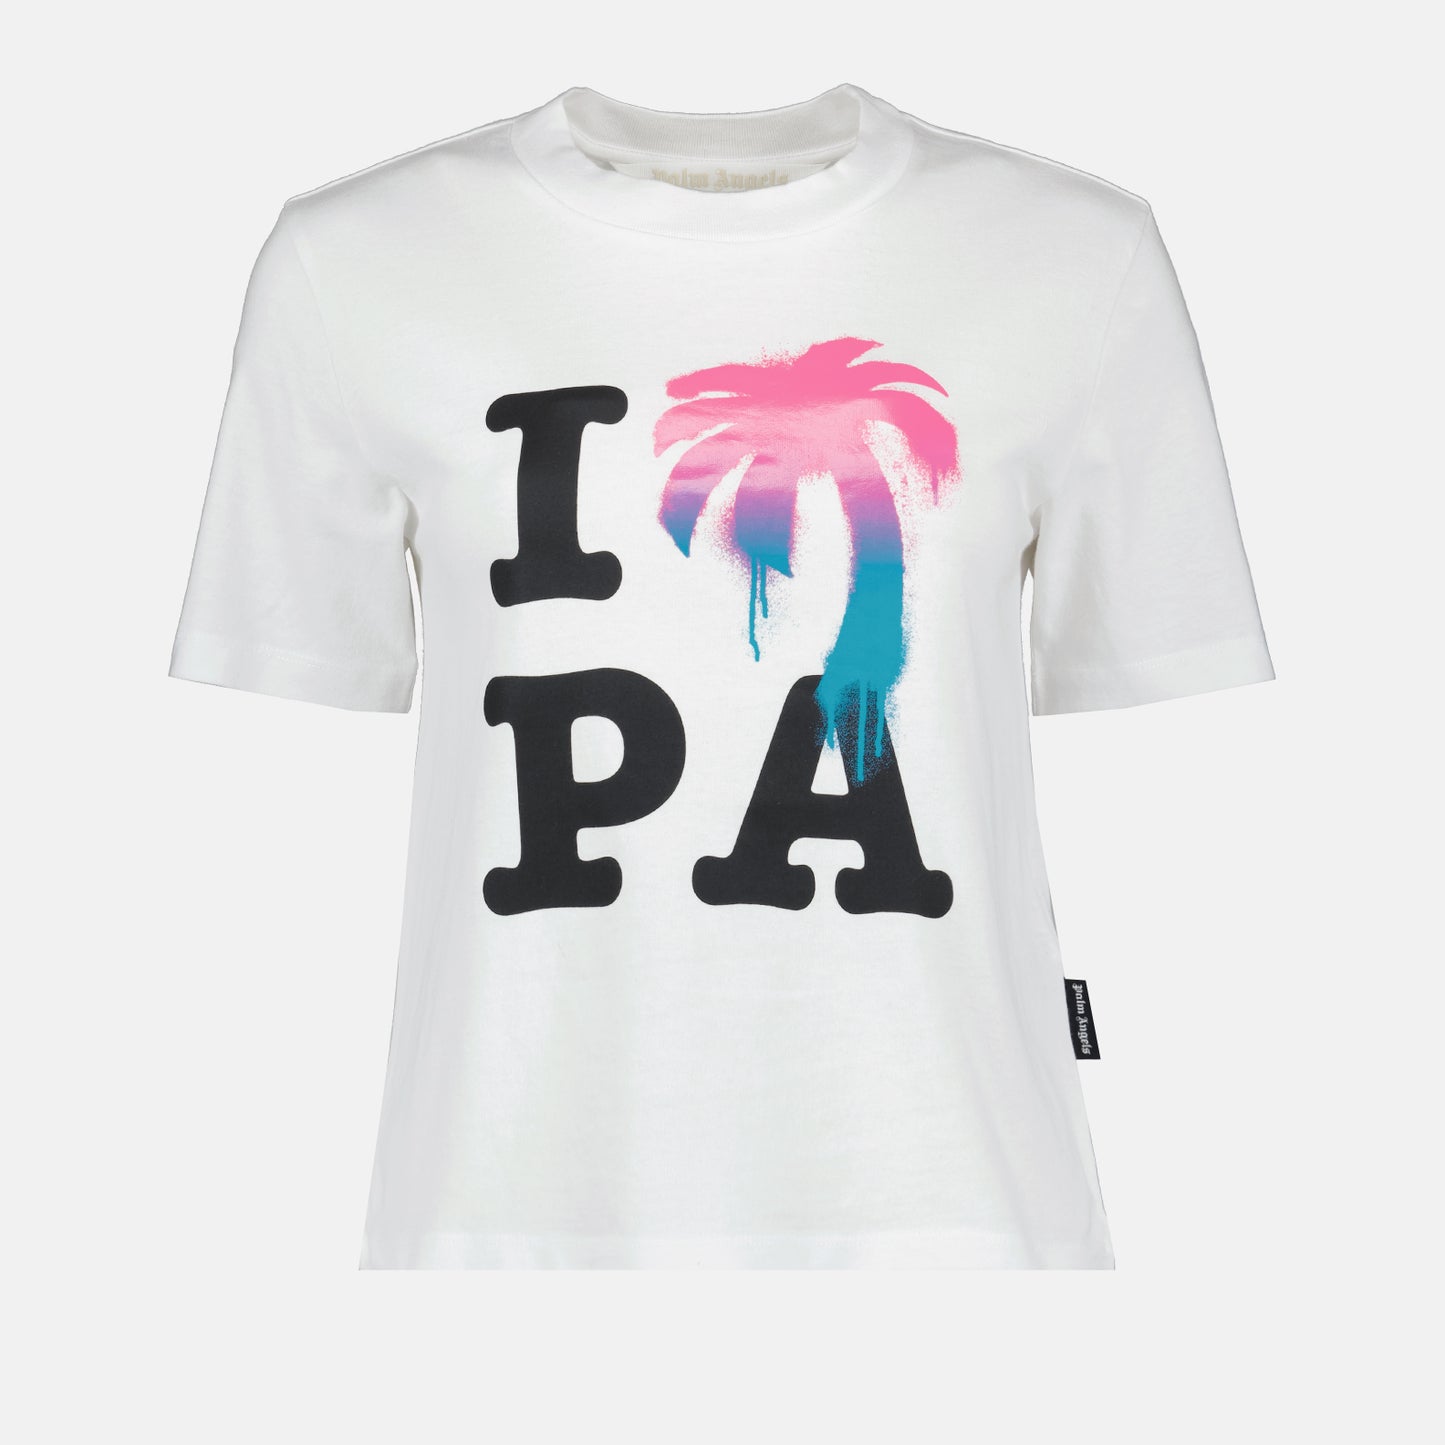 I love PA t-shirt